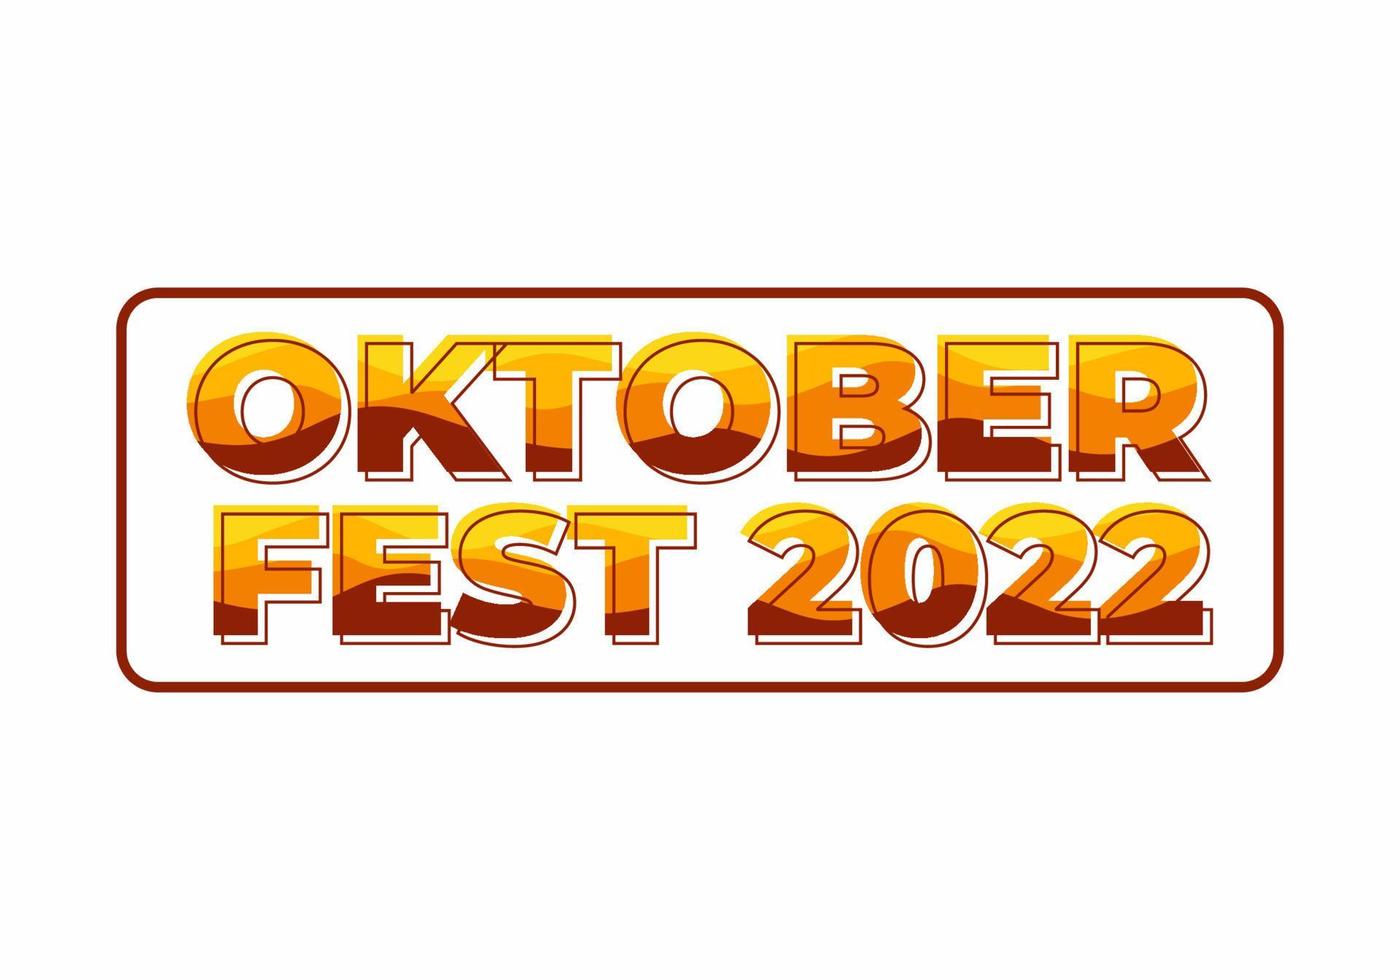 Oktoberfest-Texteffekt für Social-Media-Banner vektor